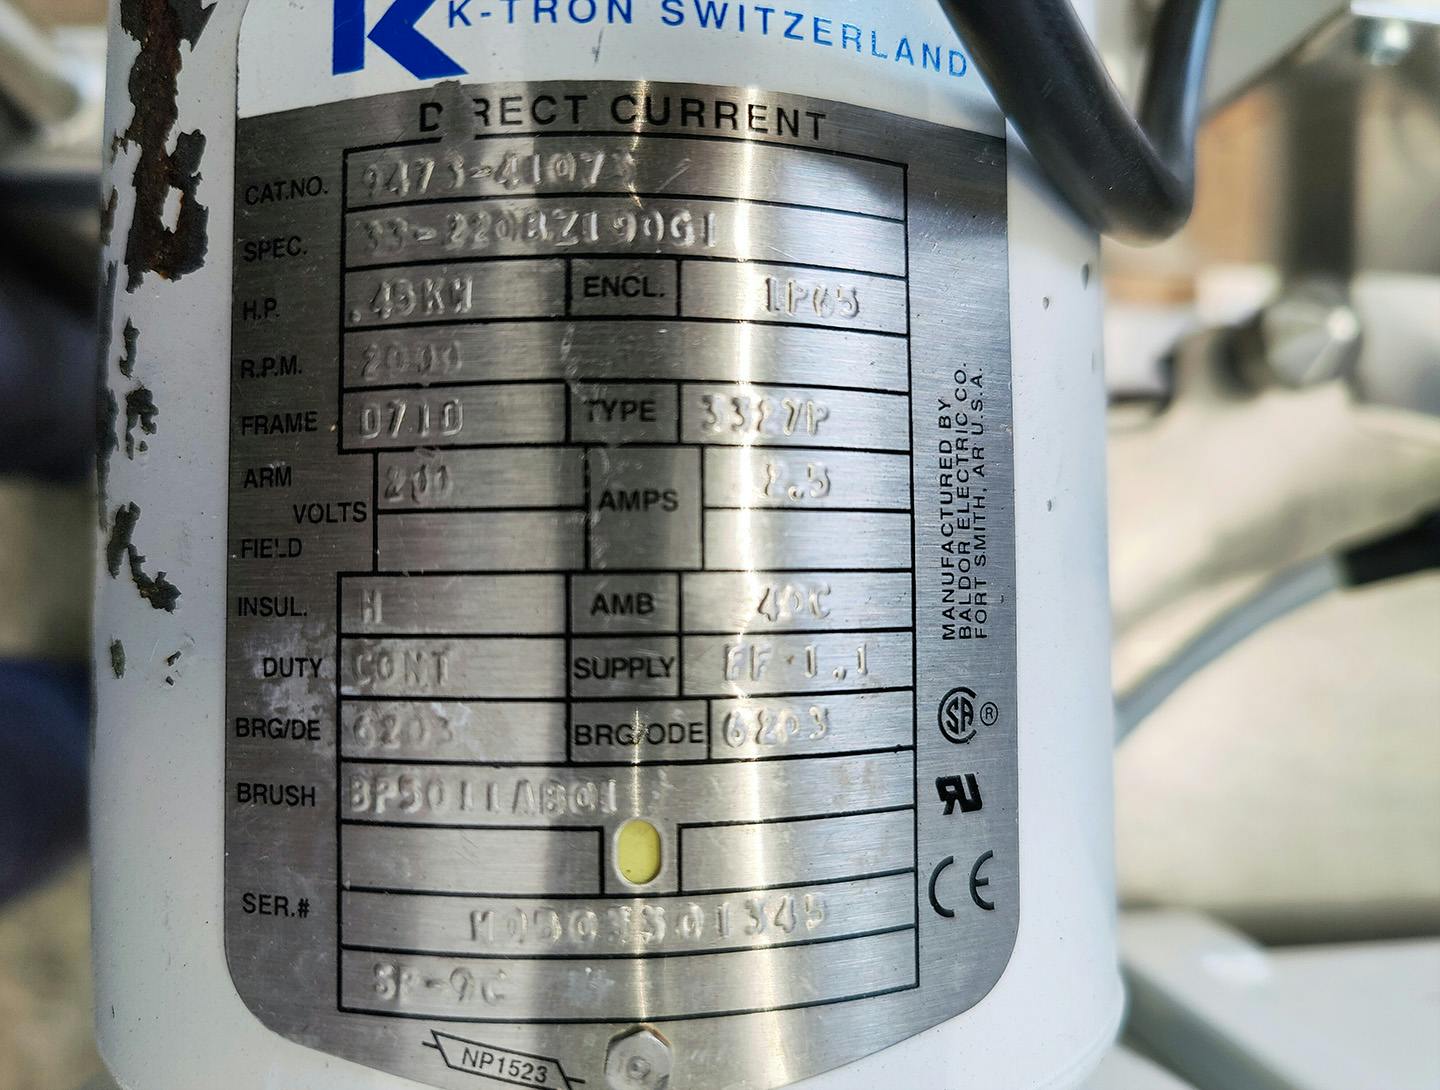 K-tron K2-ML-T35 loss-in-weight feeders - Doseur - image 9